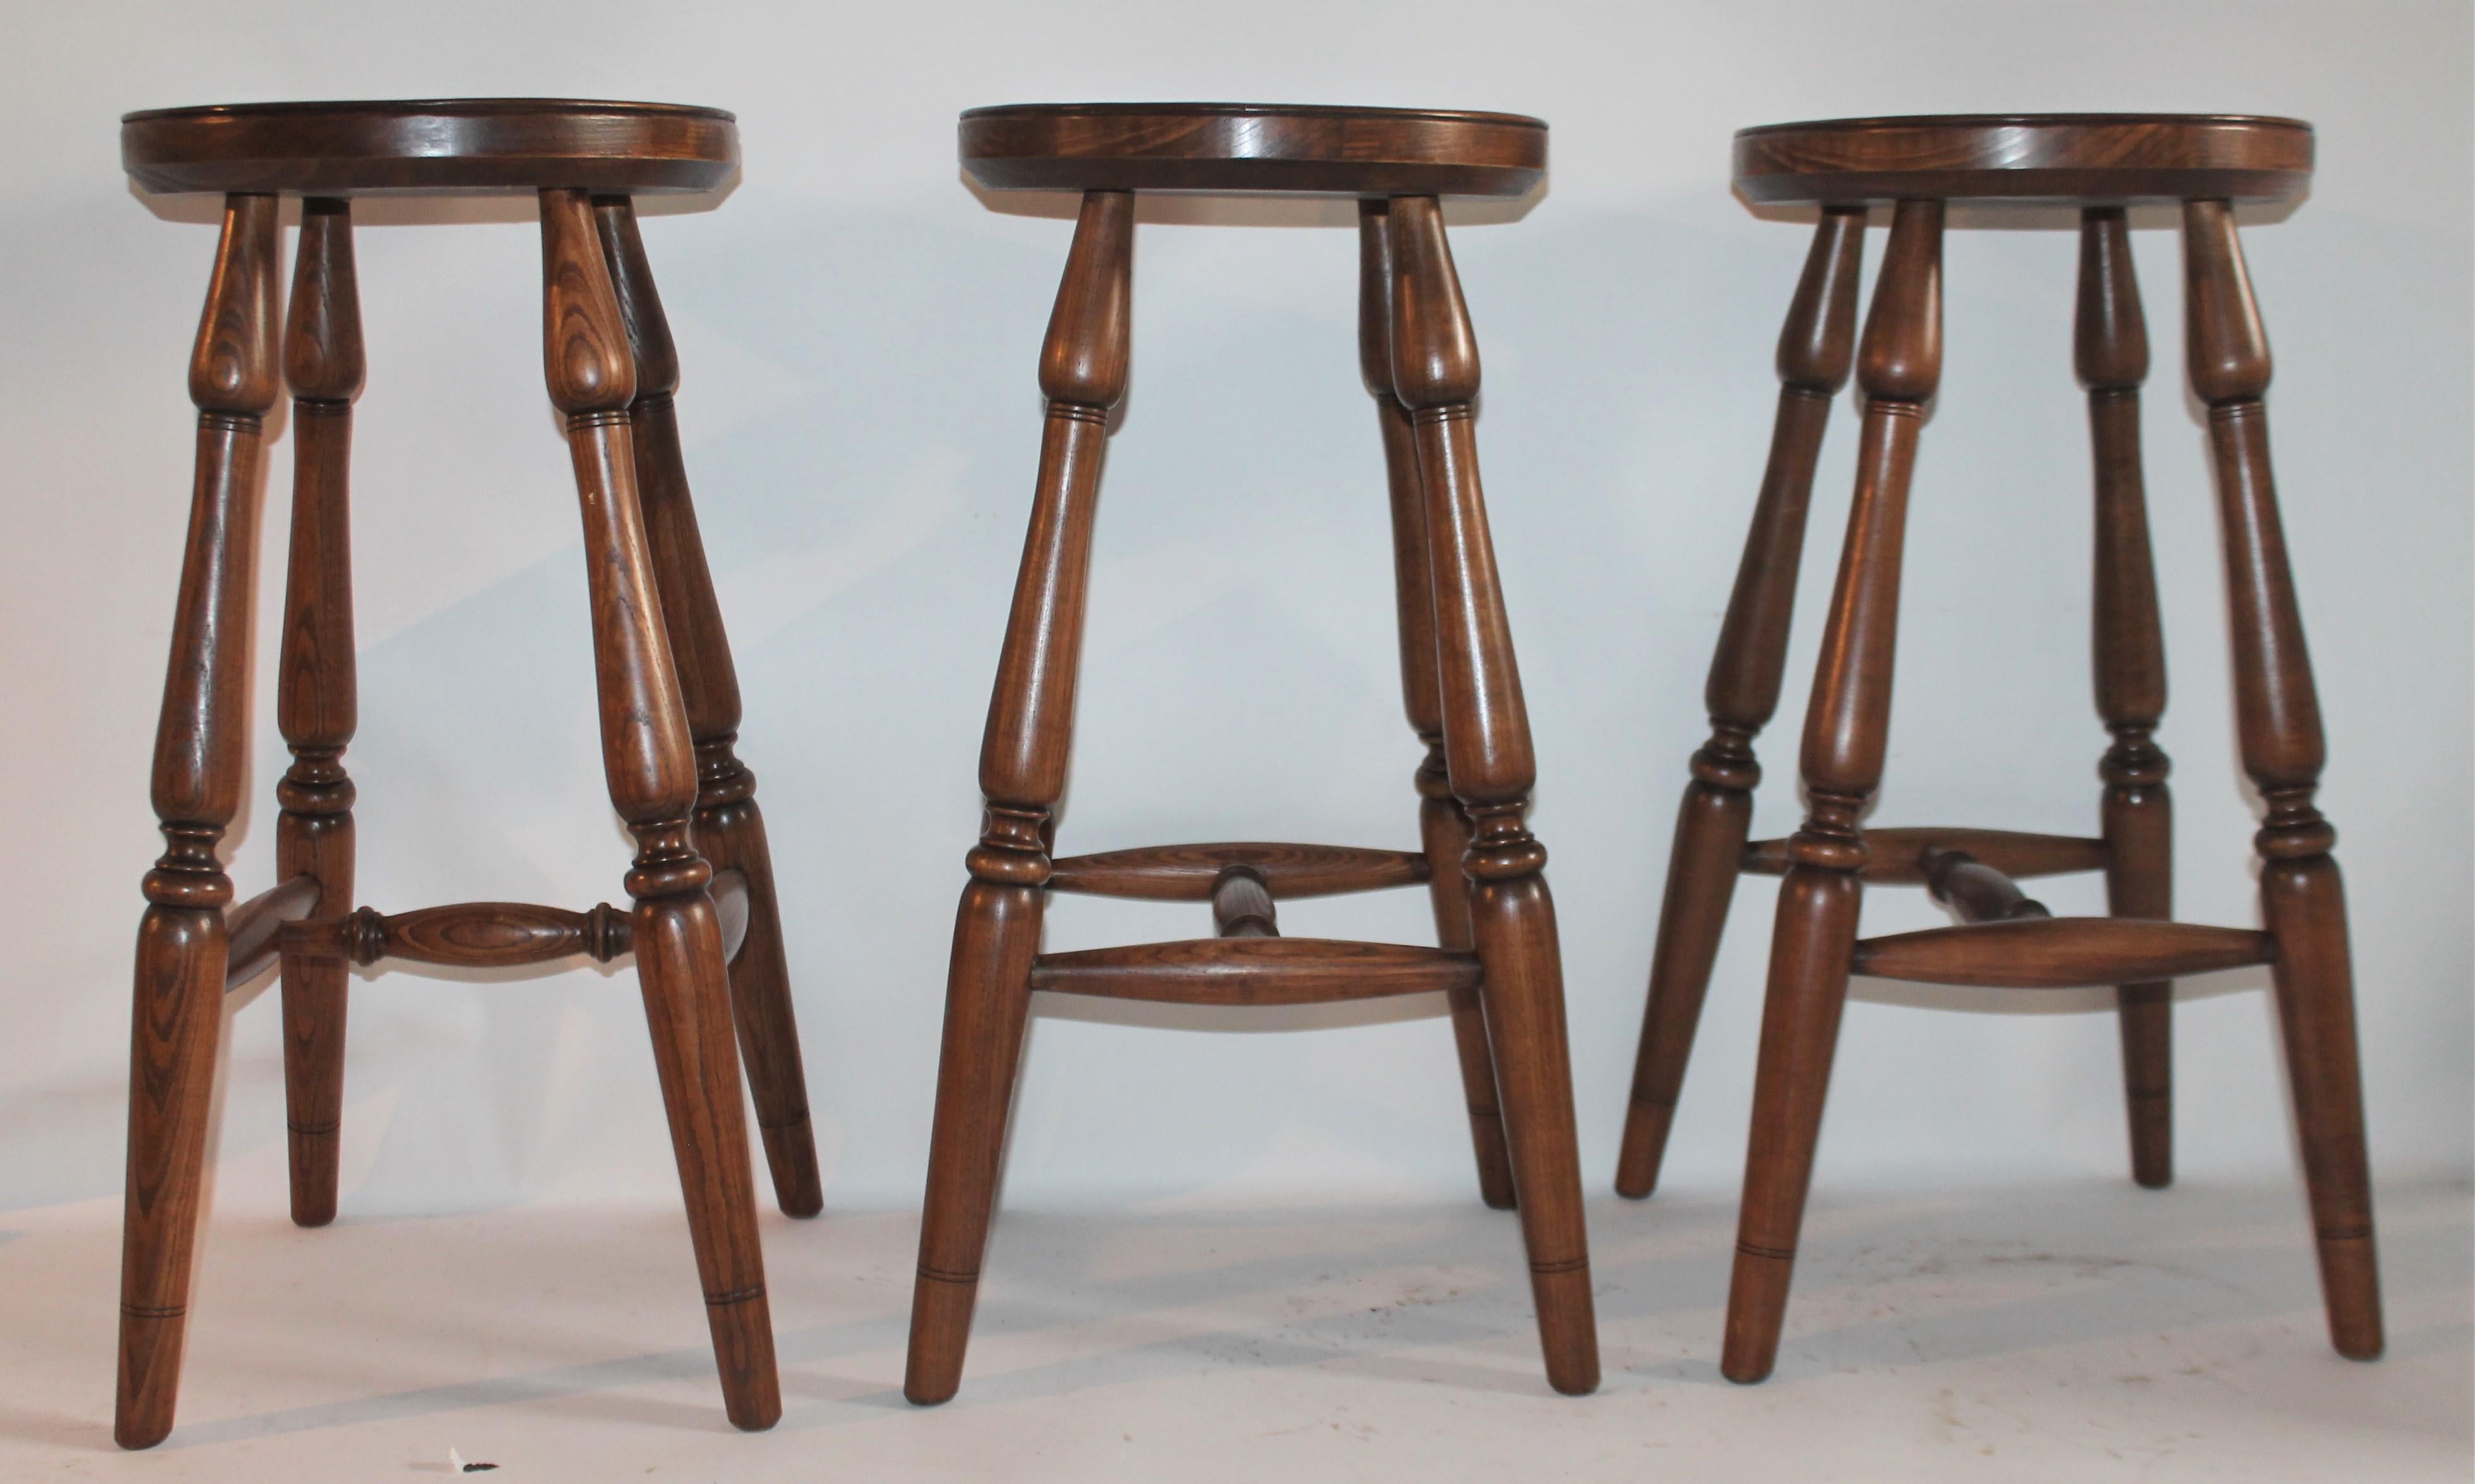 Set of three Old Hickory Furniture Company bar stools in dark wood finish. Fantastic plank seats.